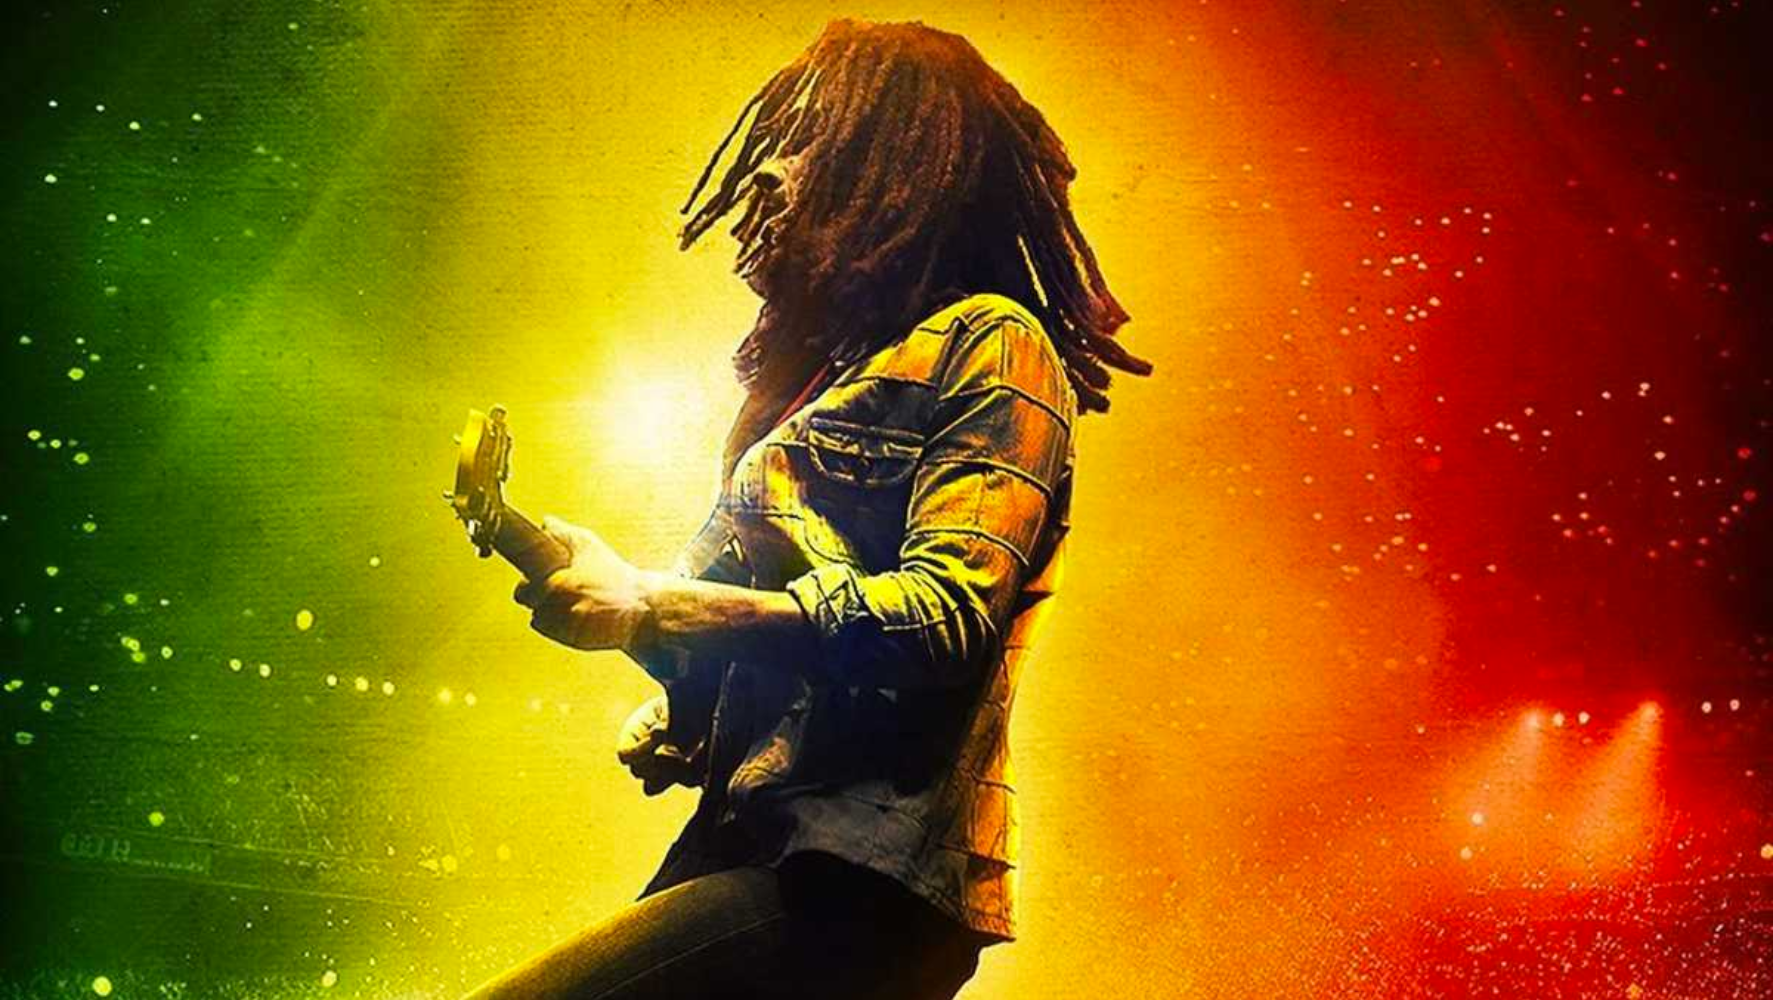 Bob Marley: La Leyenda.